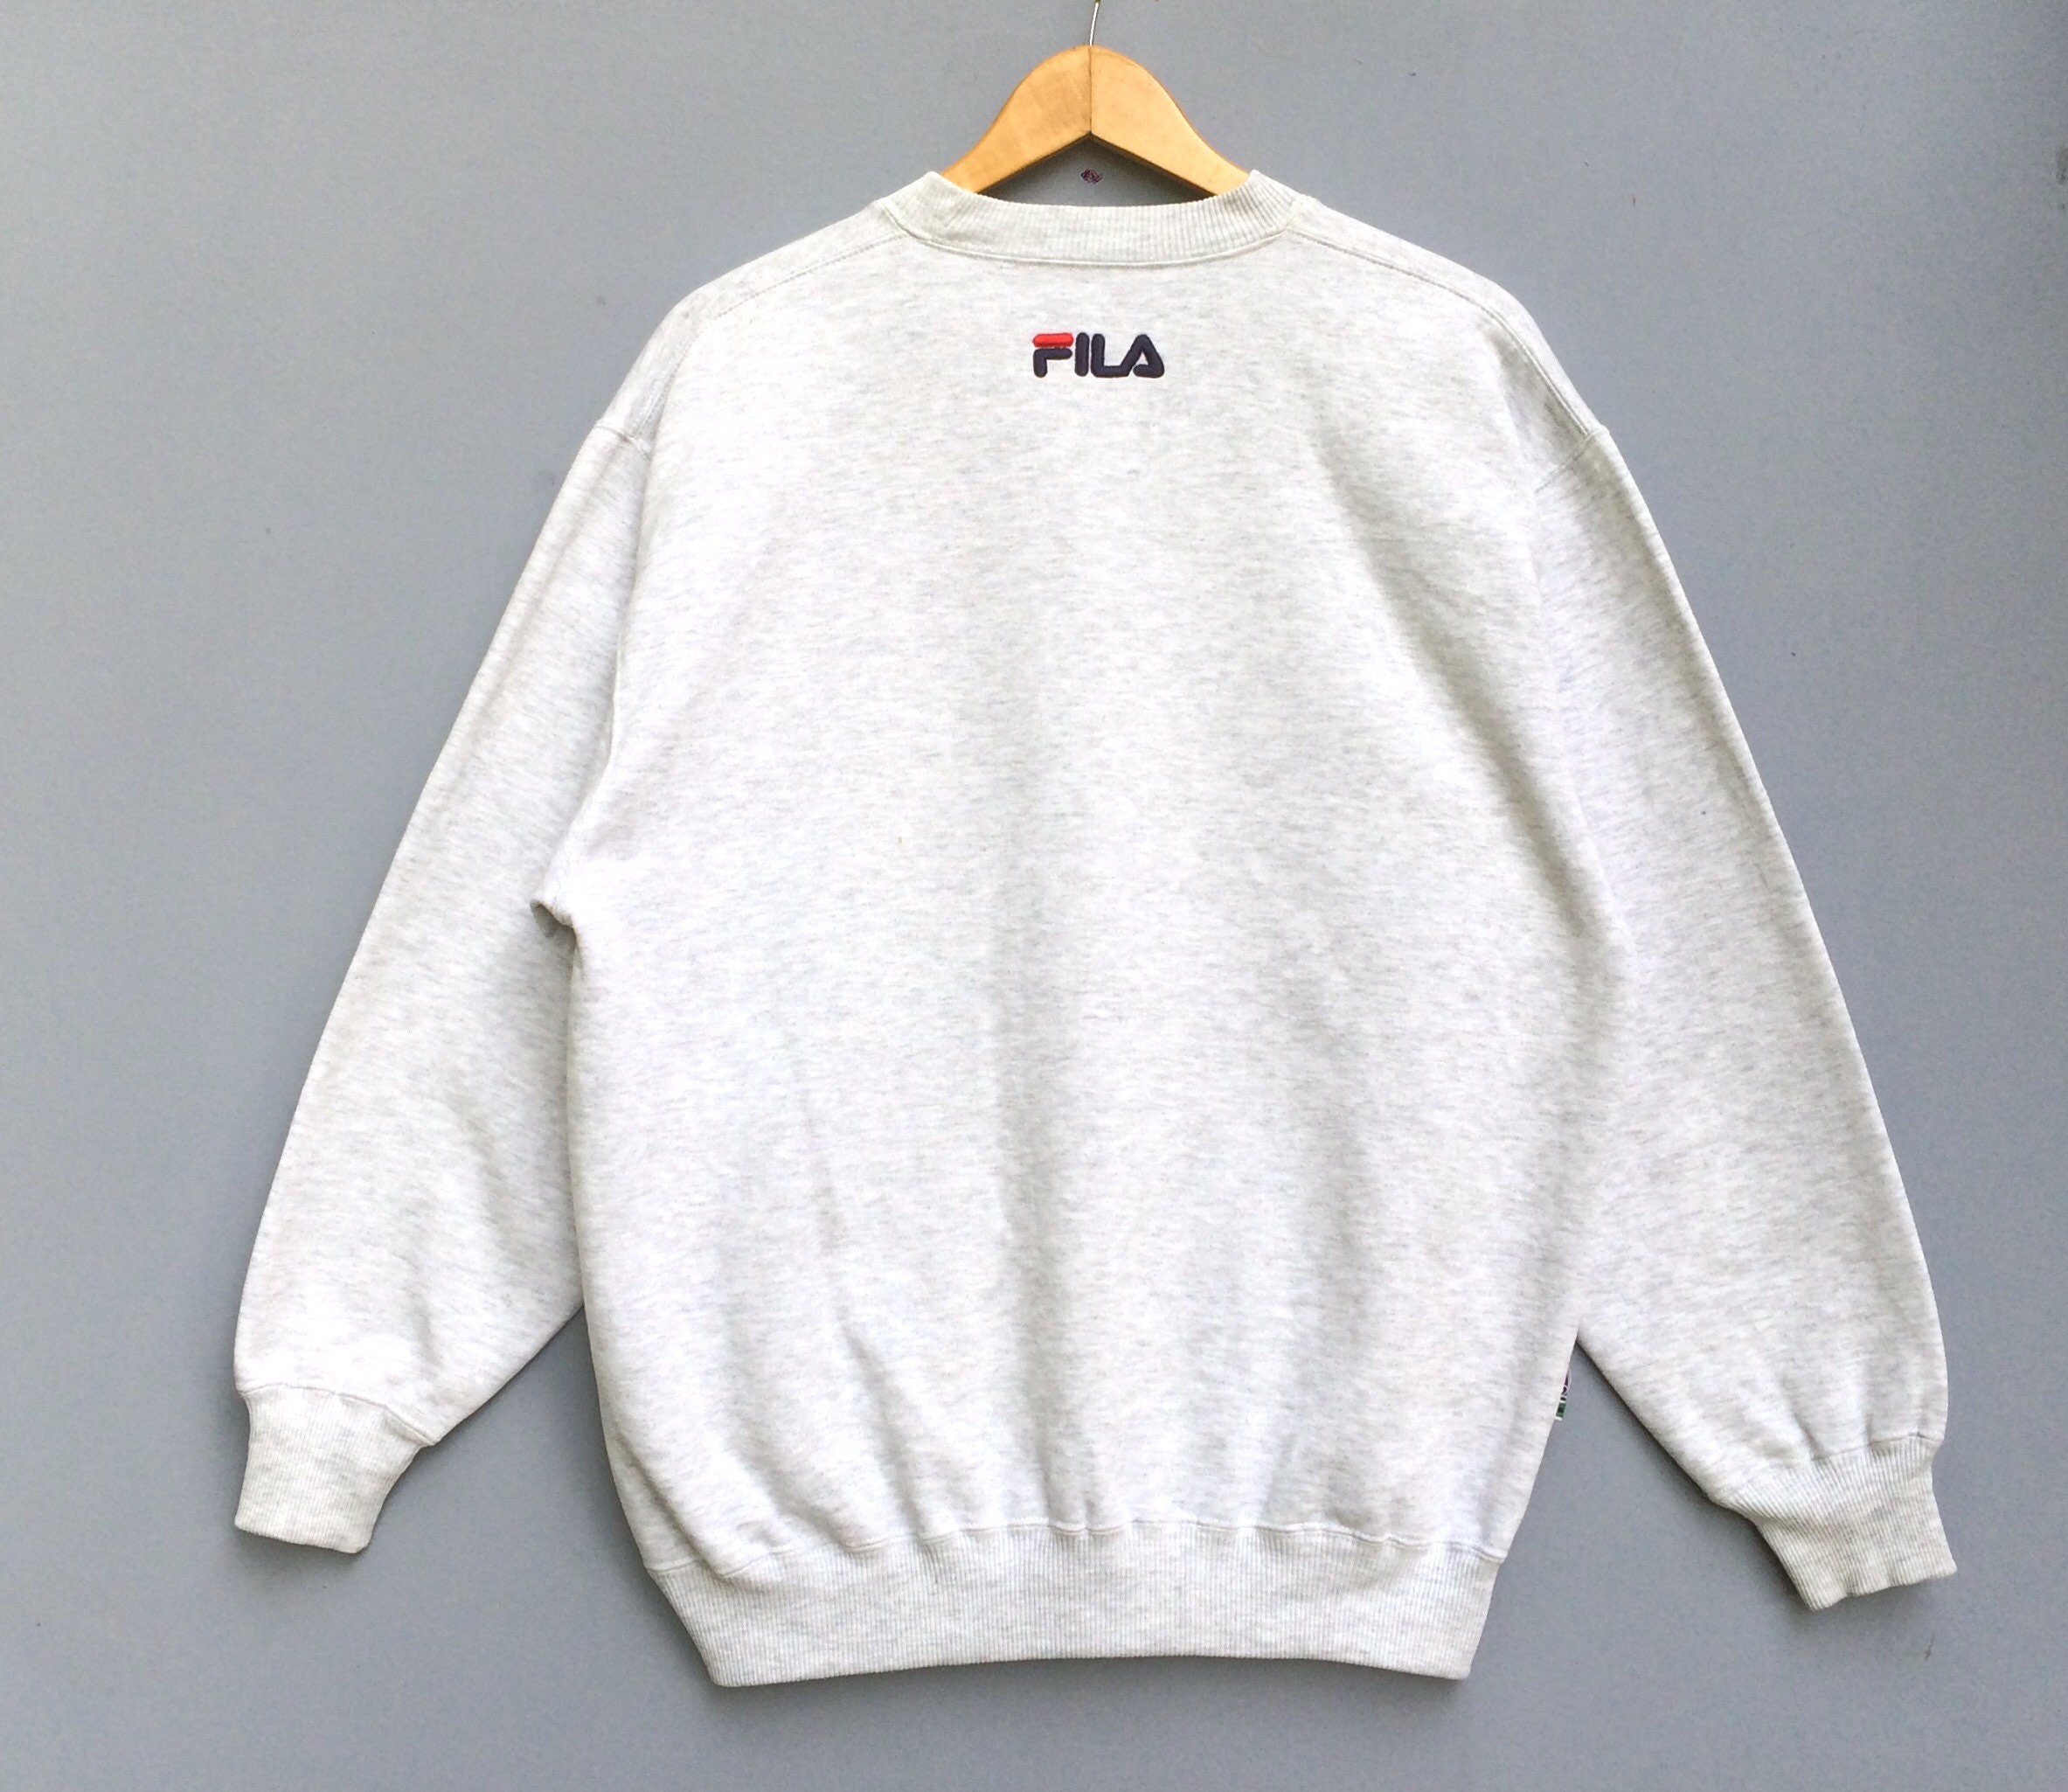 Vintage FILA BIELLA ITALIA Sweatshirt Embroidered Logo Casual | Etsy